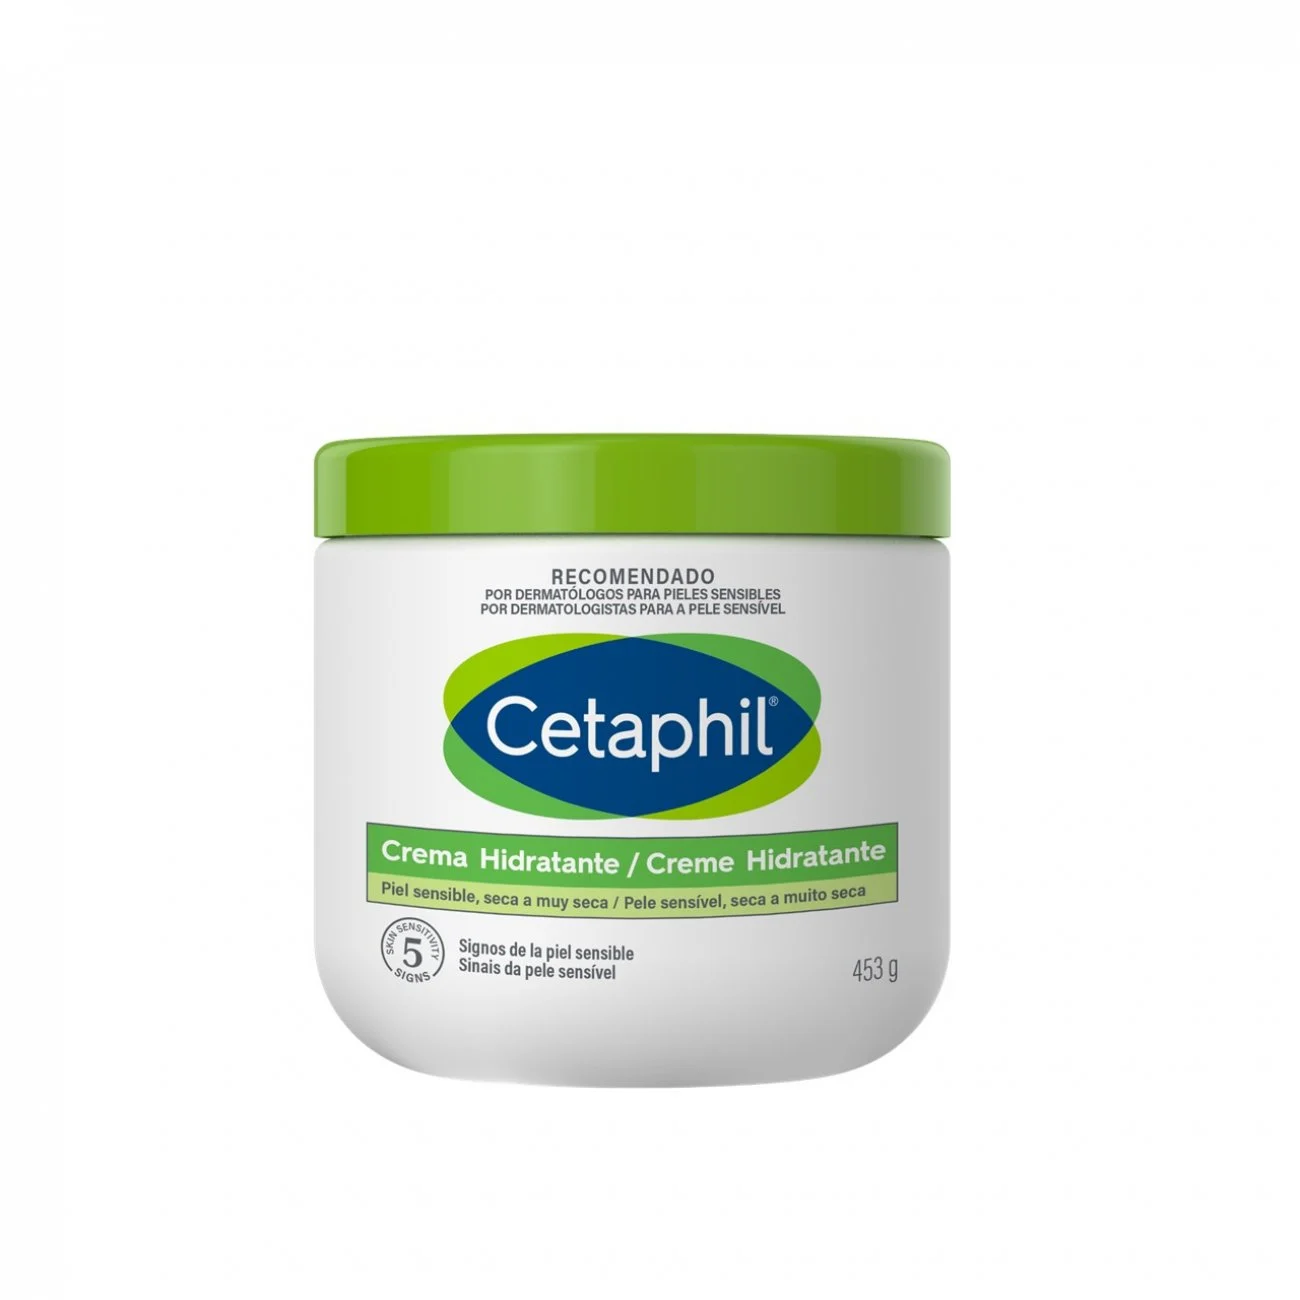 Cetaphil Product shot